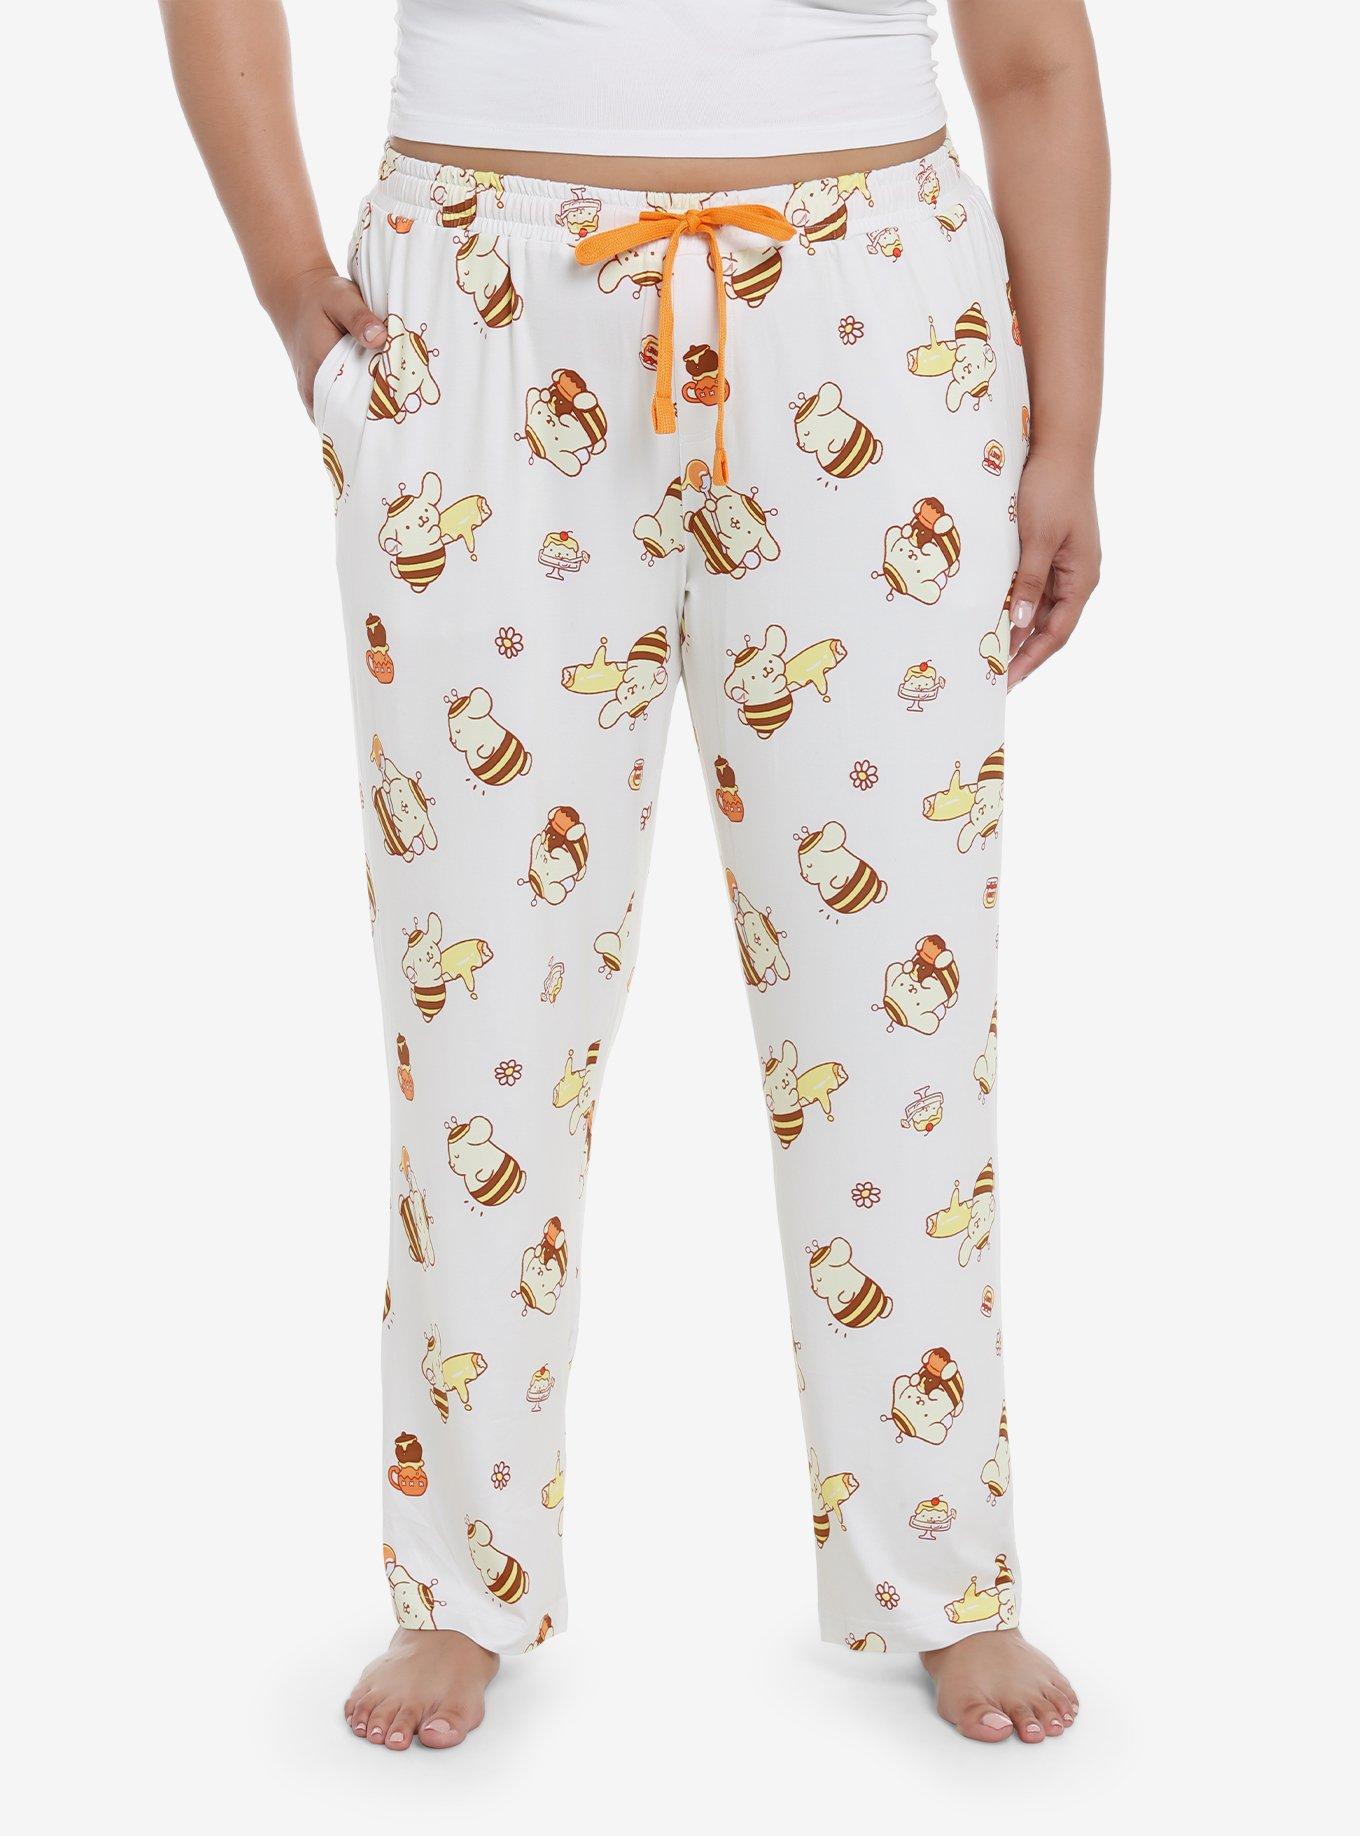 Pompompurin Honeybee Pastries Girls Pajama Pants Plus Size